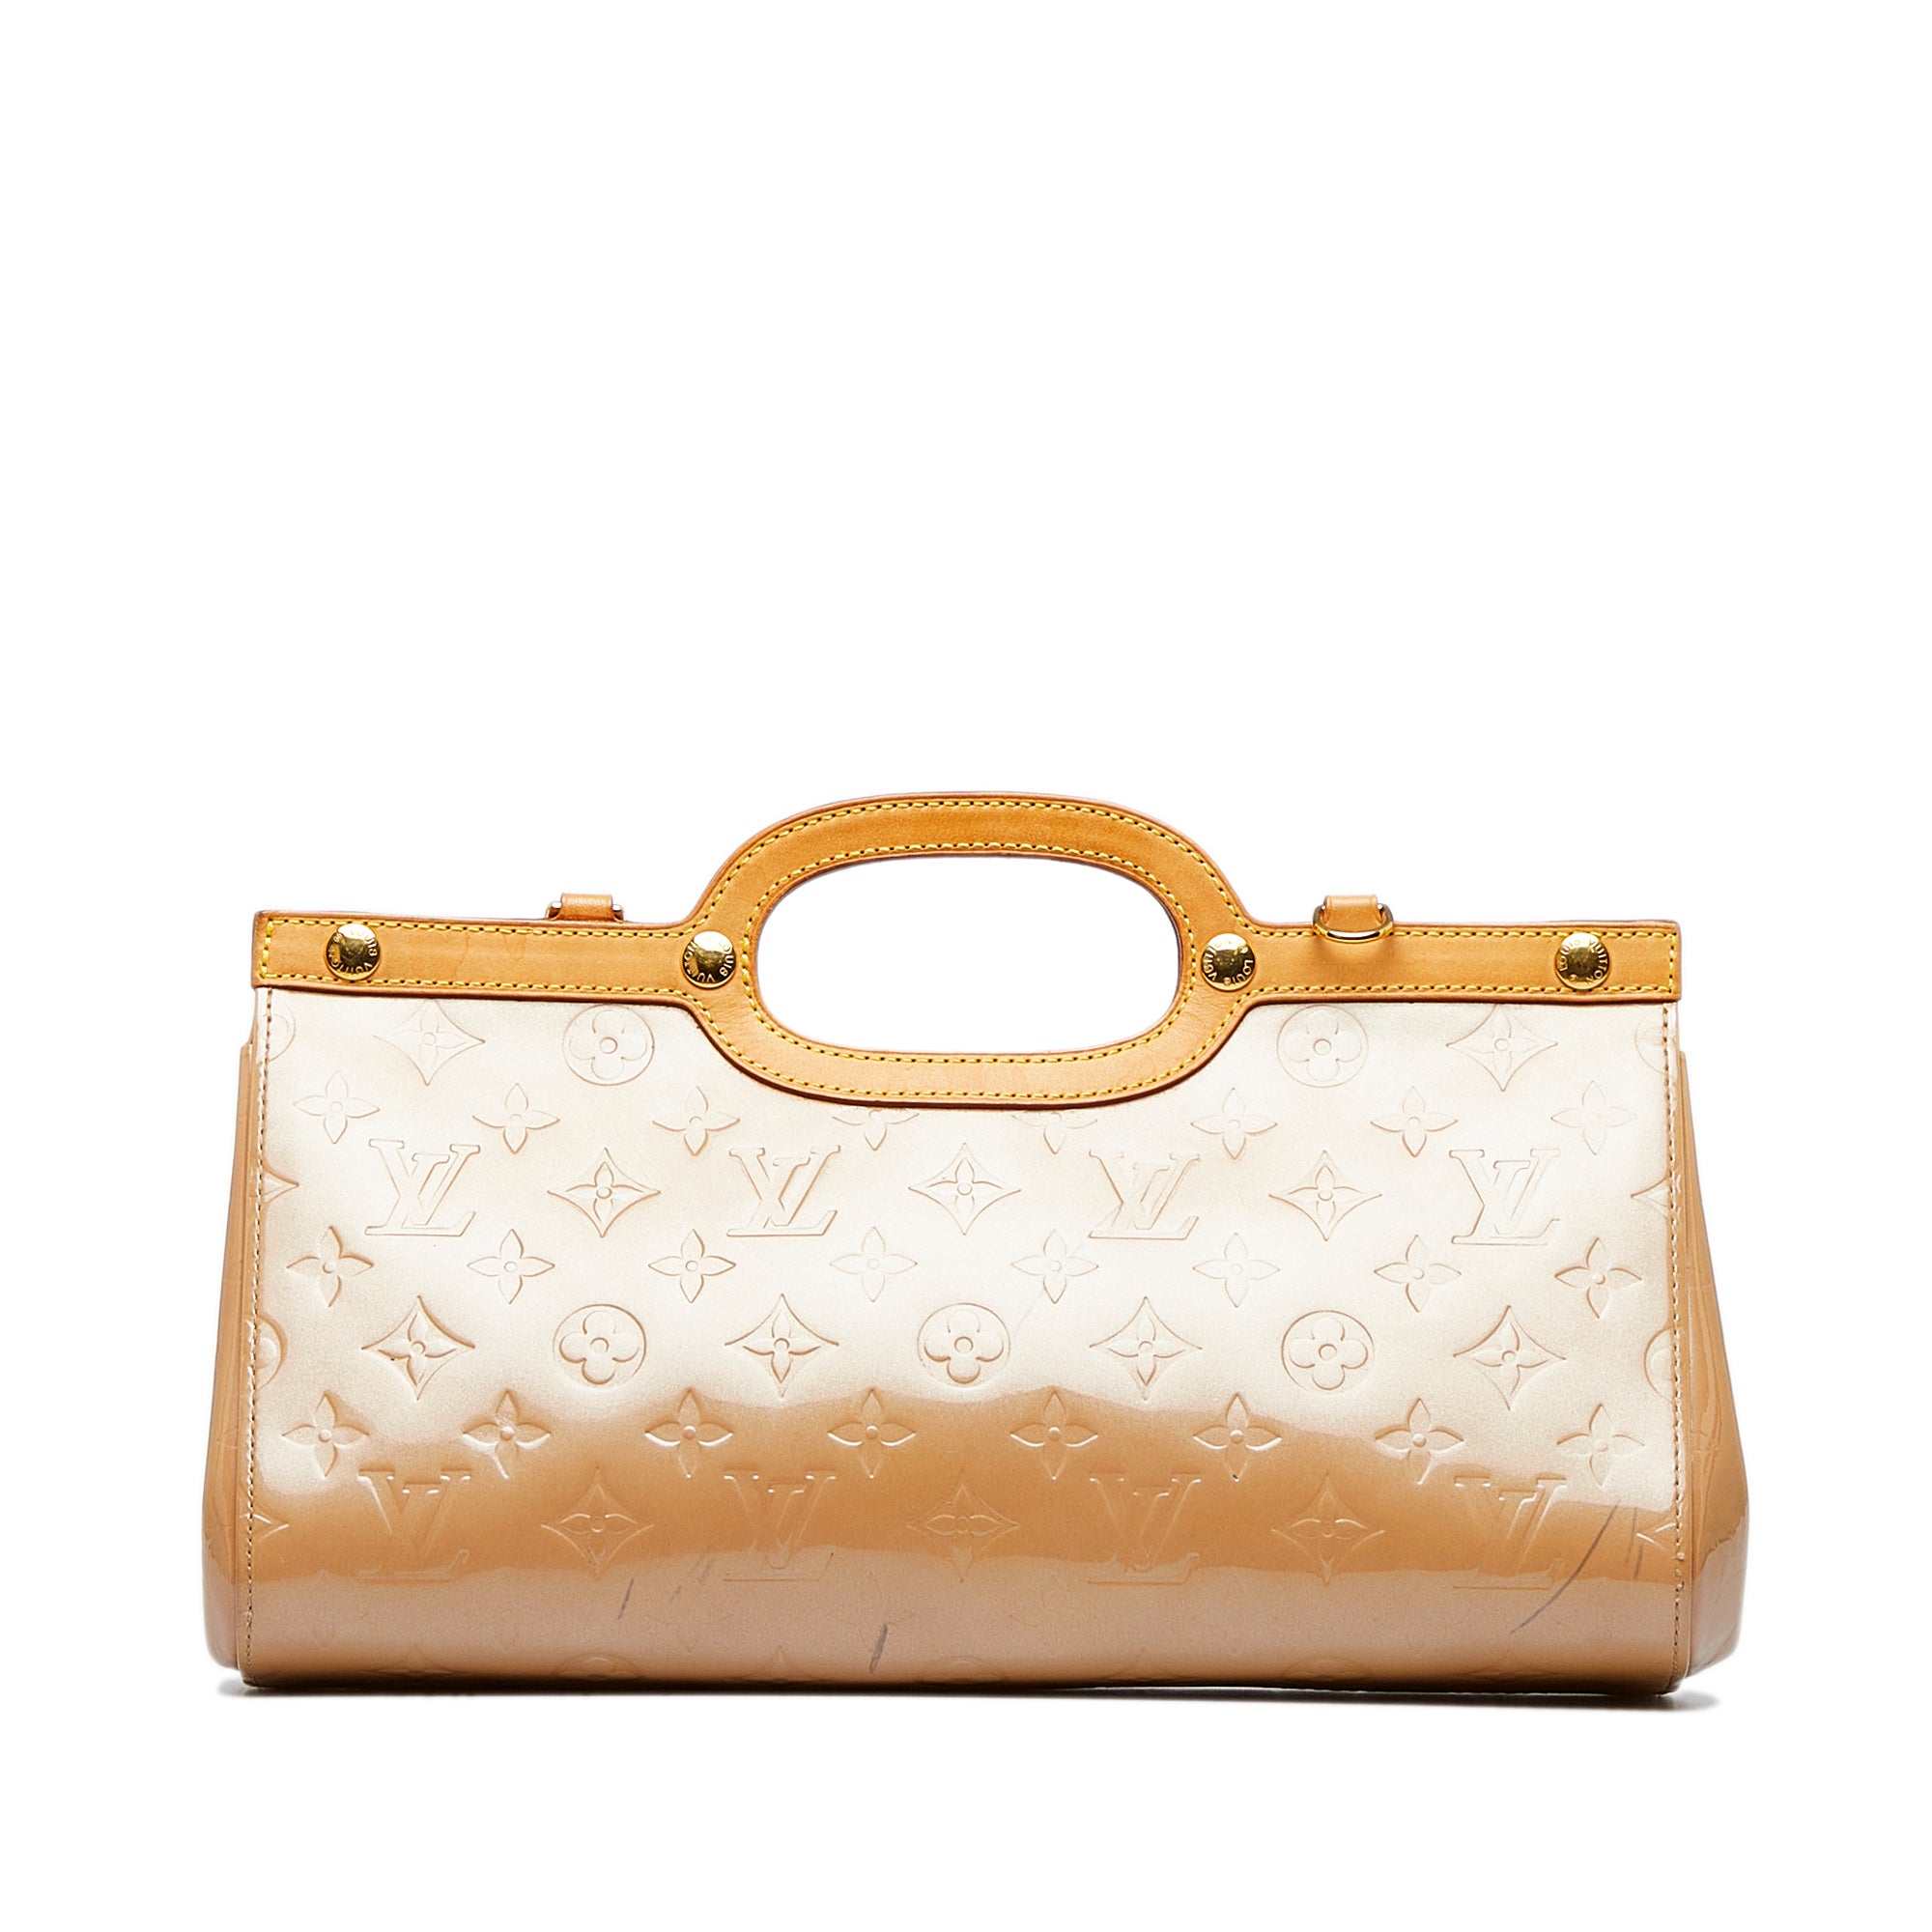 Louis Vuitton: Vernis Roxbury Drive (Handbag Review) 